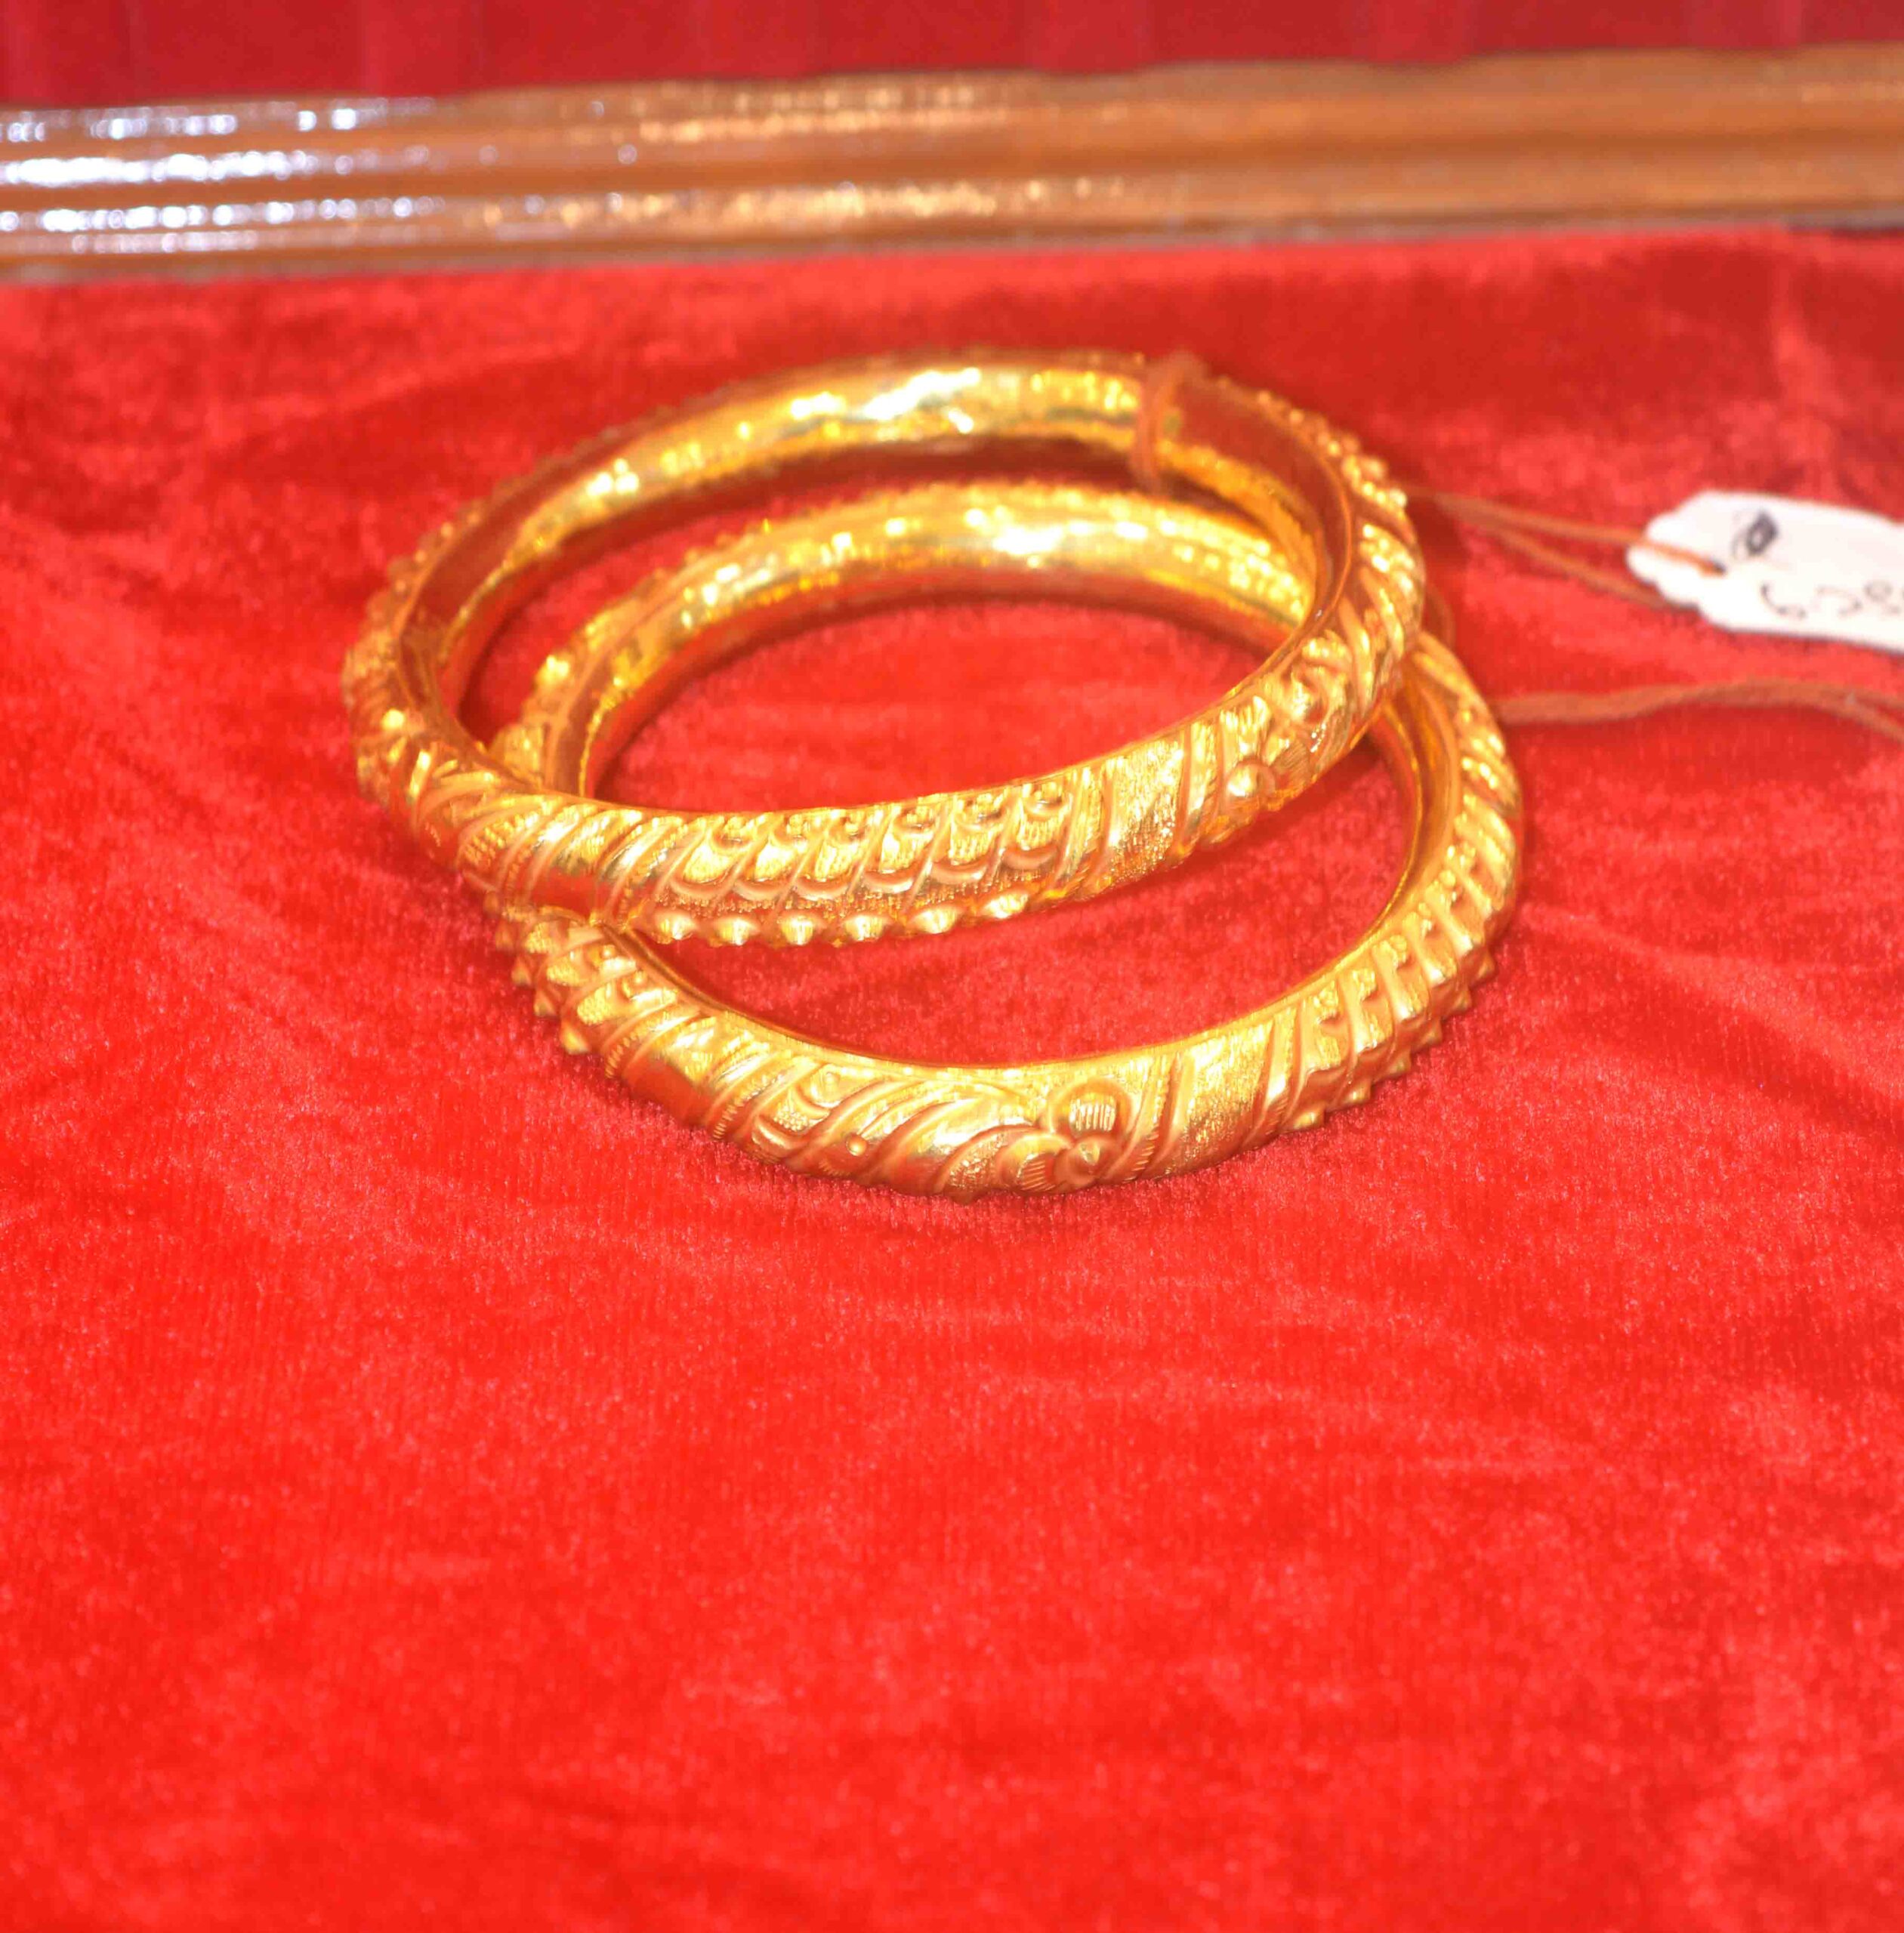 Buy Rudraksha Spiritual Gold Plated Wrist Band Shiva Bhakt Mahakal Festival  Kada Cuff Bracelet Online at Low Prices in India - Amazon.in